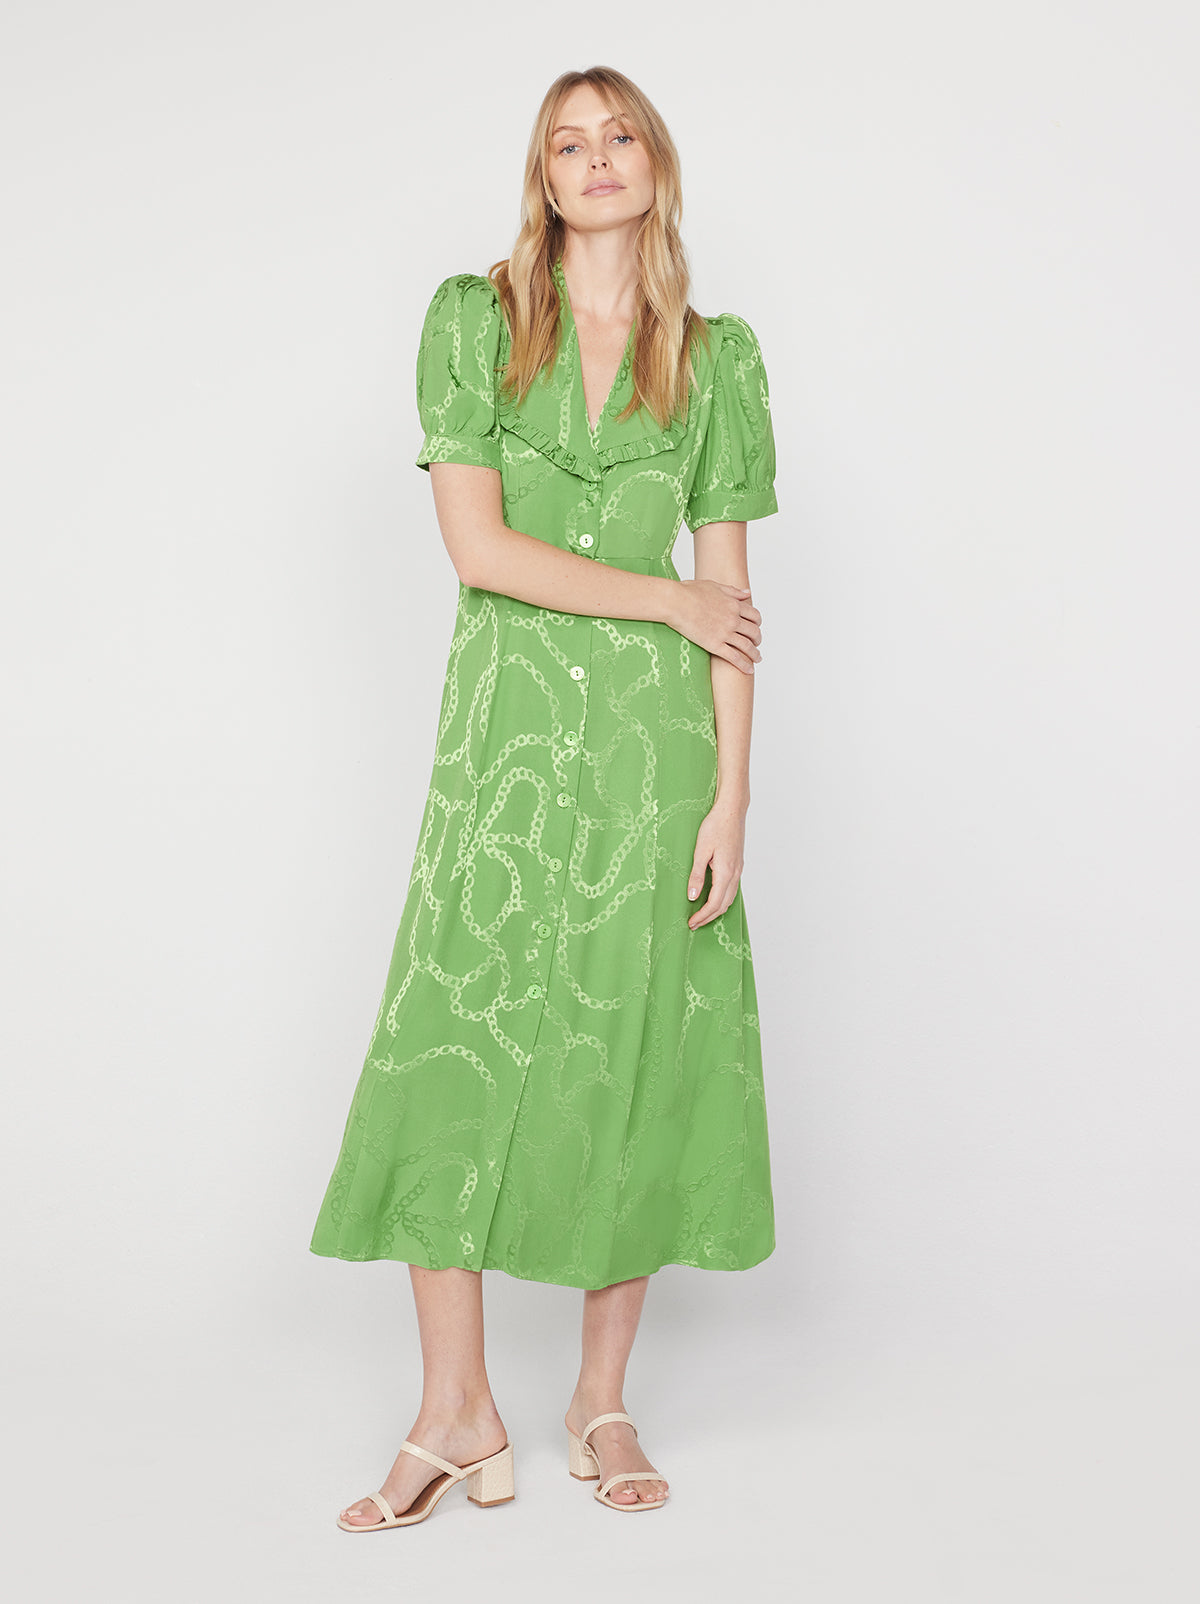 Bethany Green Chain Jacquard Tea Dress By KITRI Studio